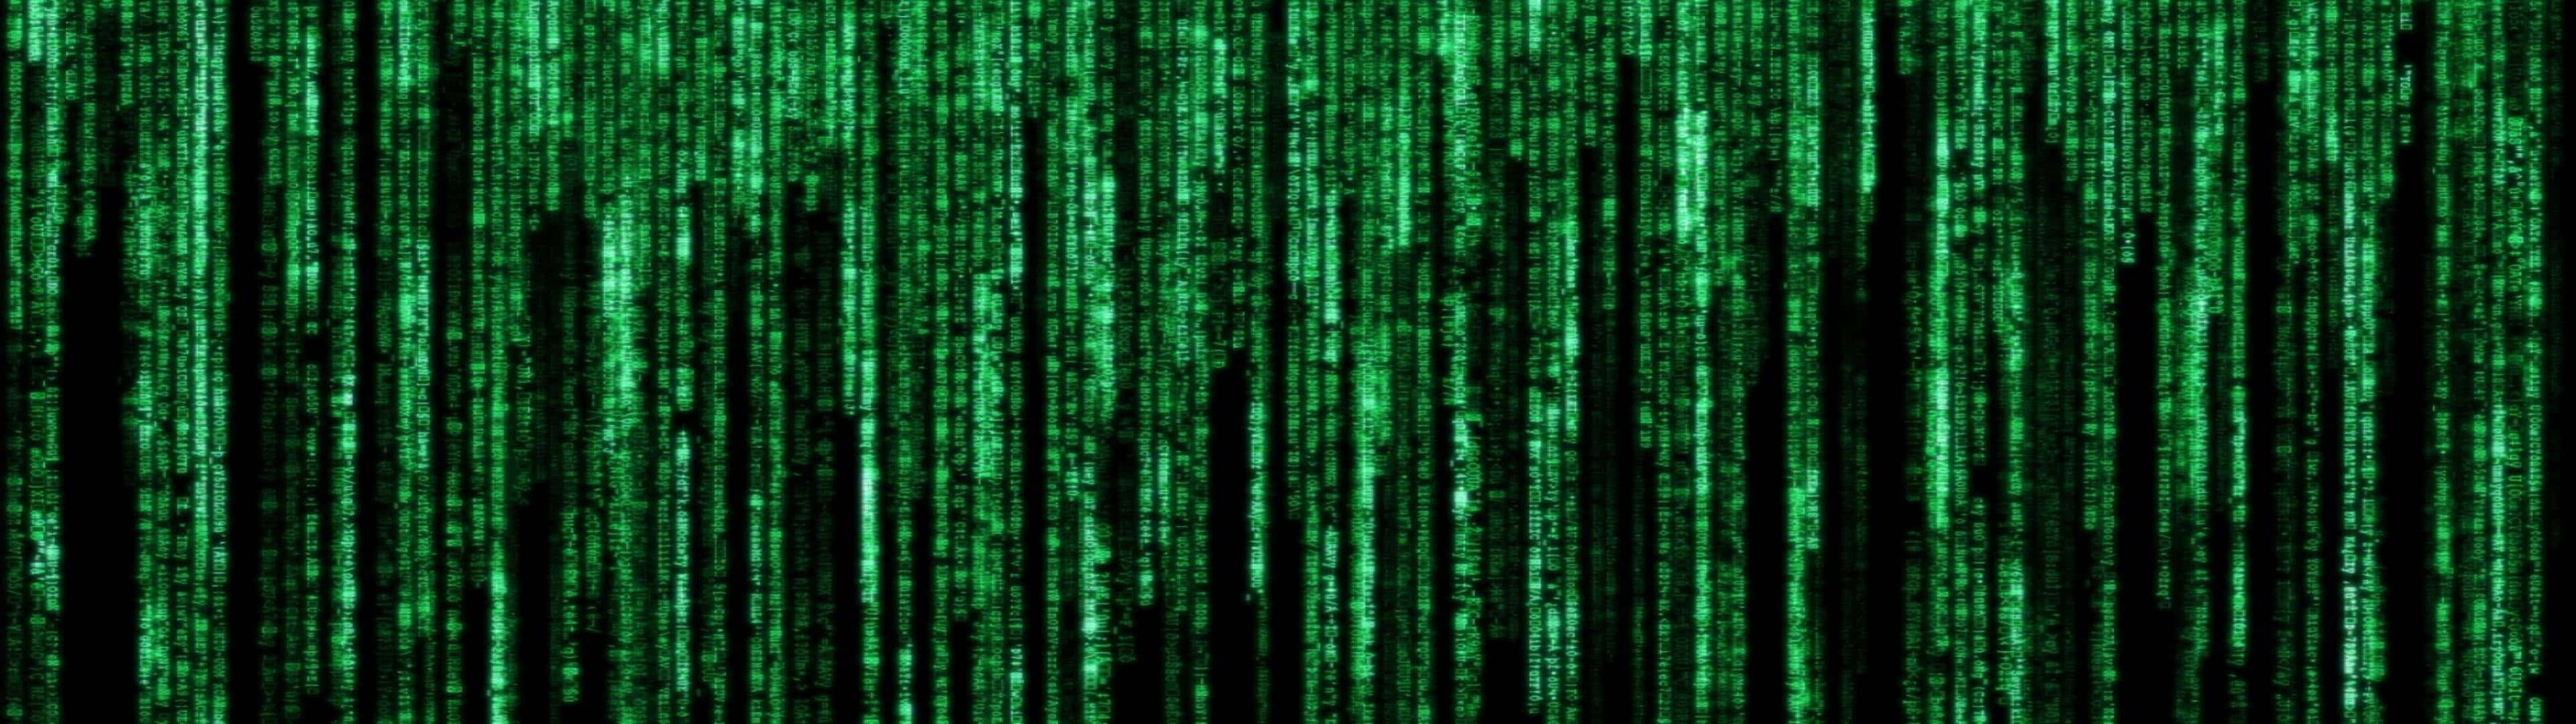 Dasmatrix-hintergrundbild - Grünes Matrix-hintergrundbild